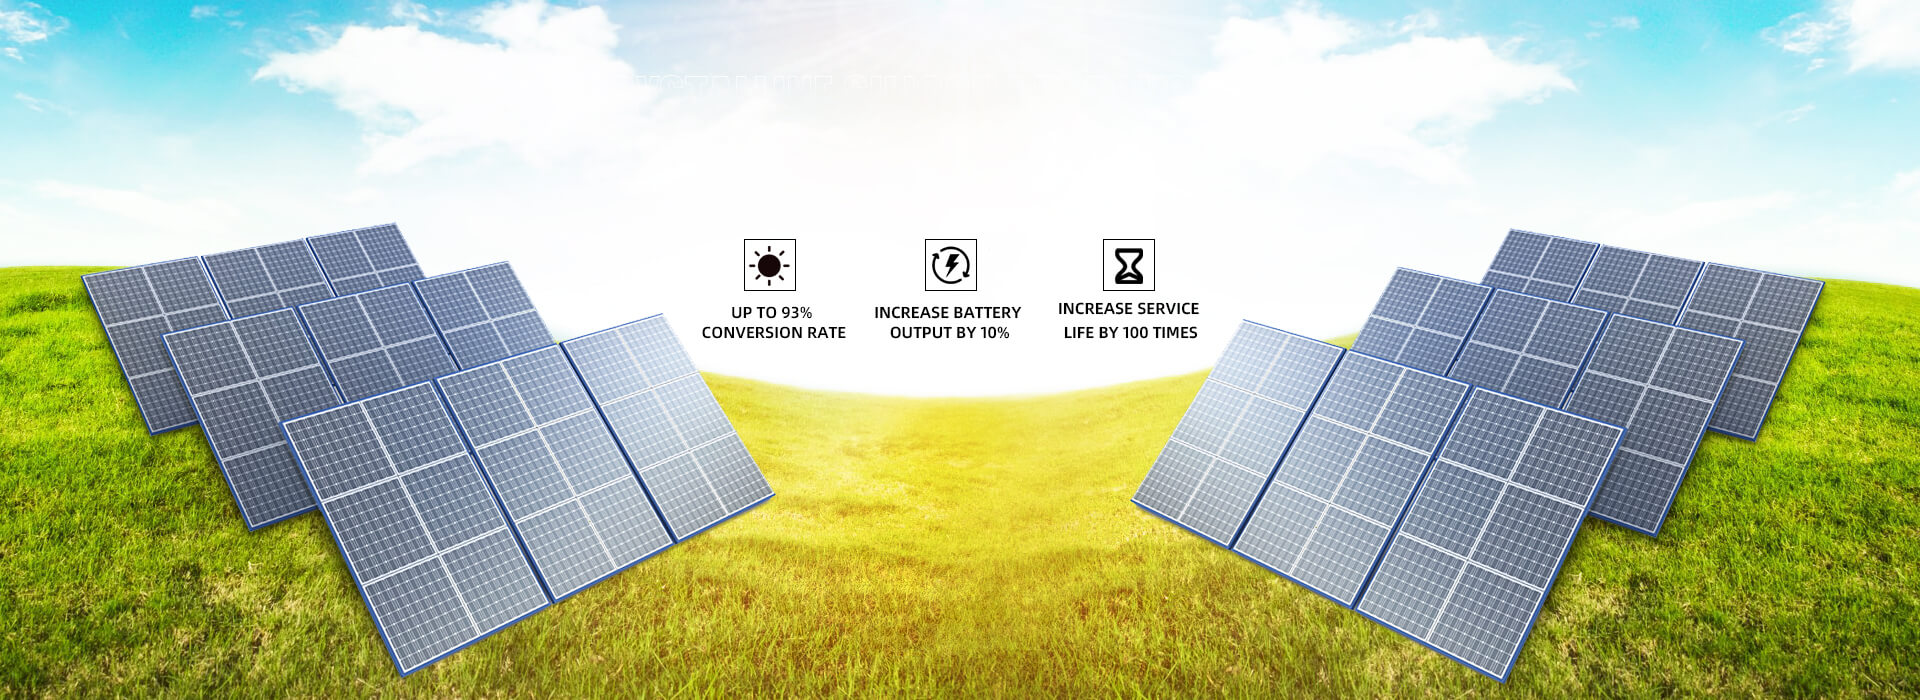 Solar Panel in Sunlight - Off-Grid Solar System Kit - Renewable Energy Source